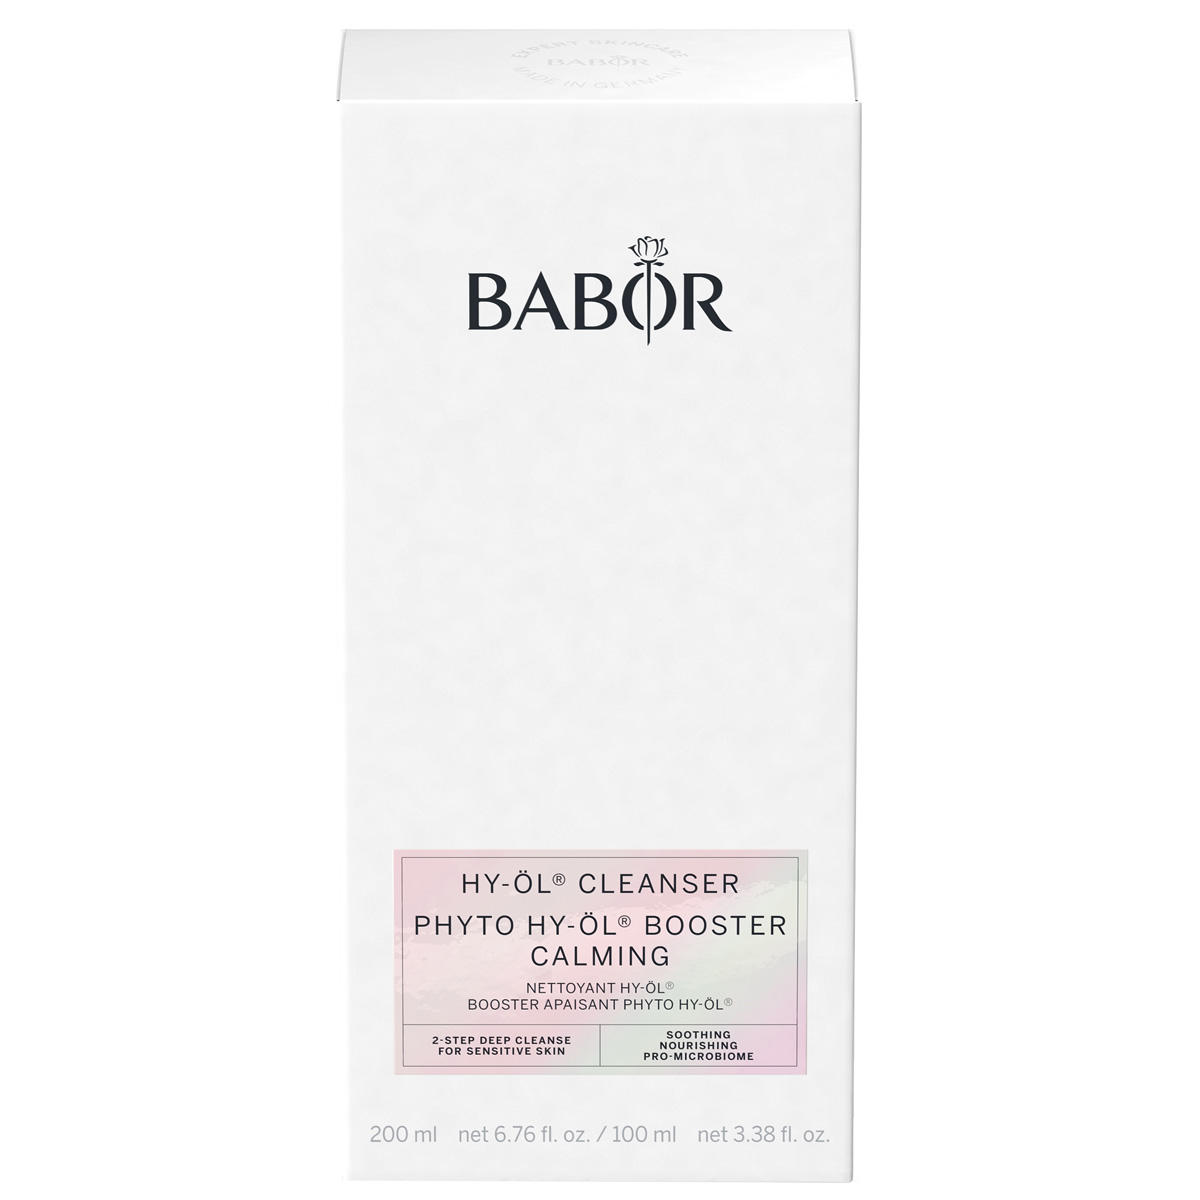 BABOR CLEANSING HY-ÖL & Phyto HY-ÖL Booster Calming Set  - 1